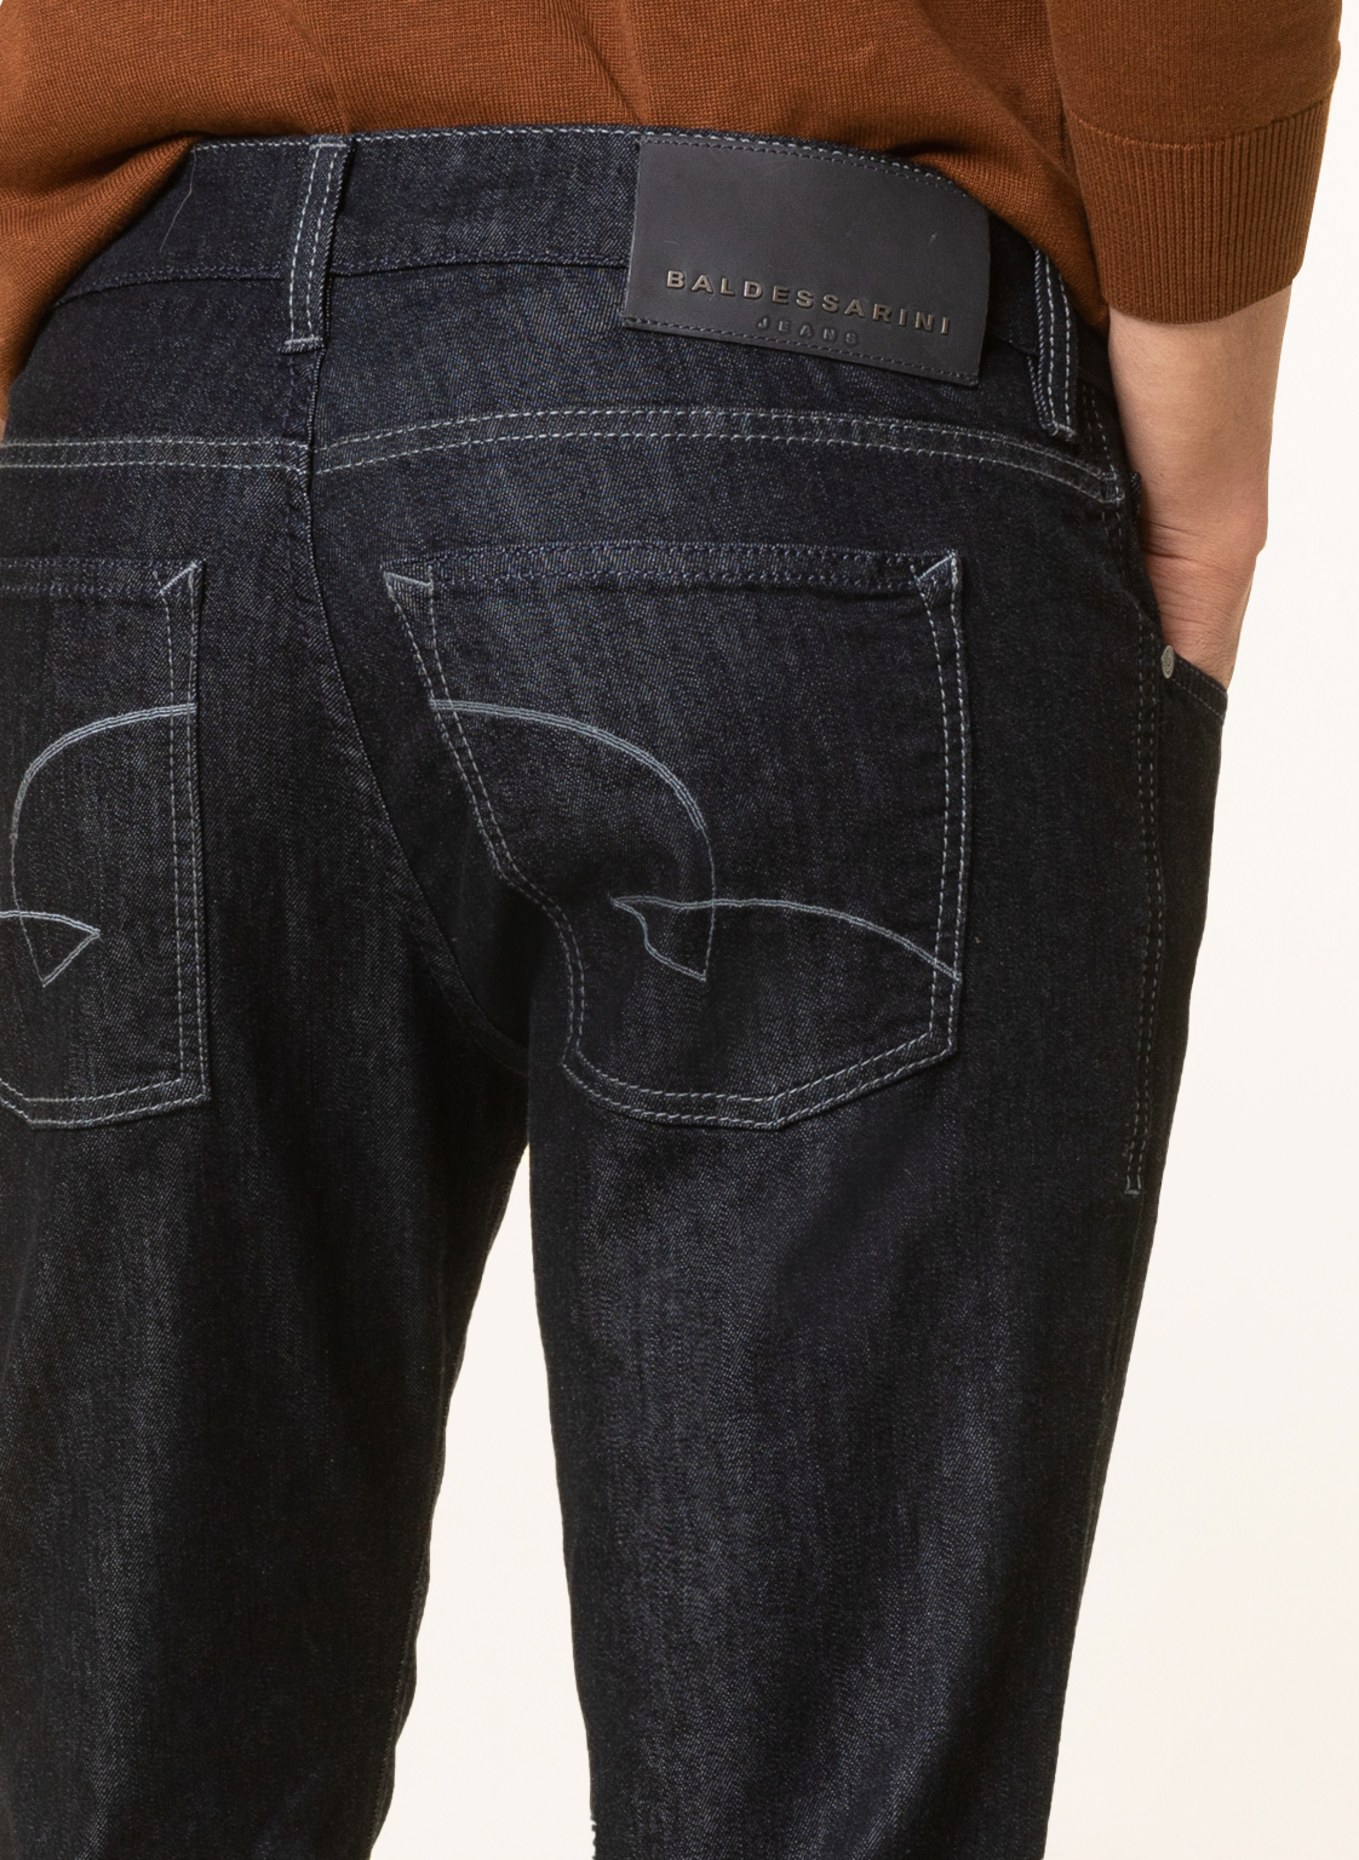 BALDESSARINI Jeans Regular Fit, Farbe: 6810 dark blue raw (Bild 5)